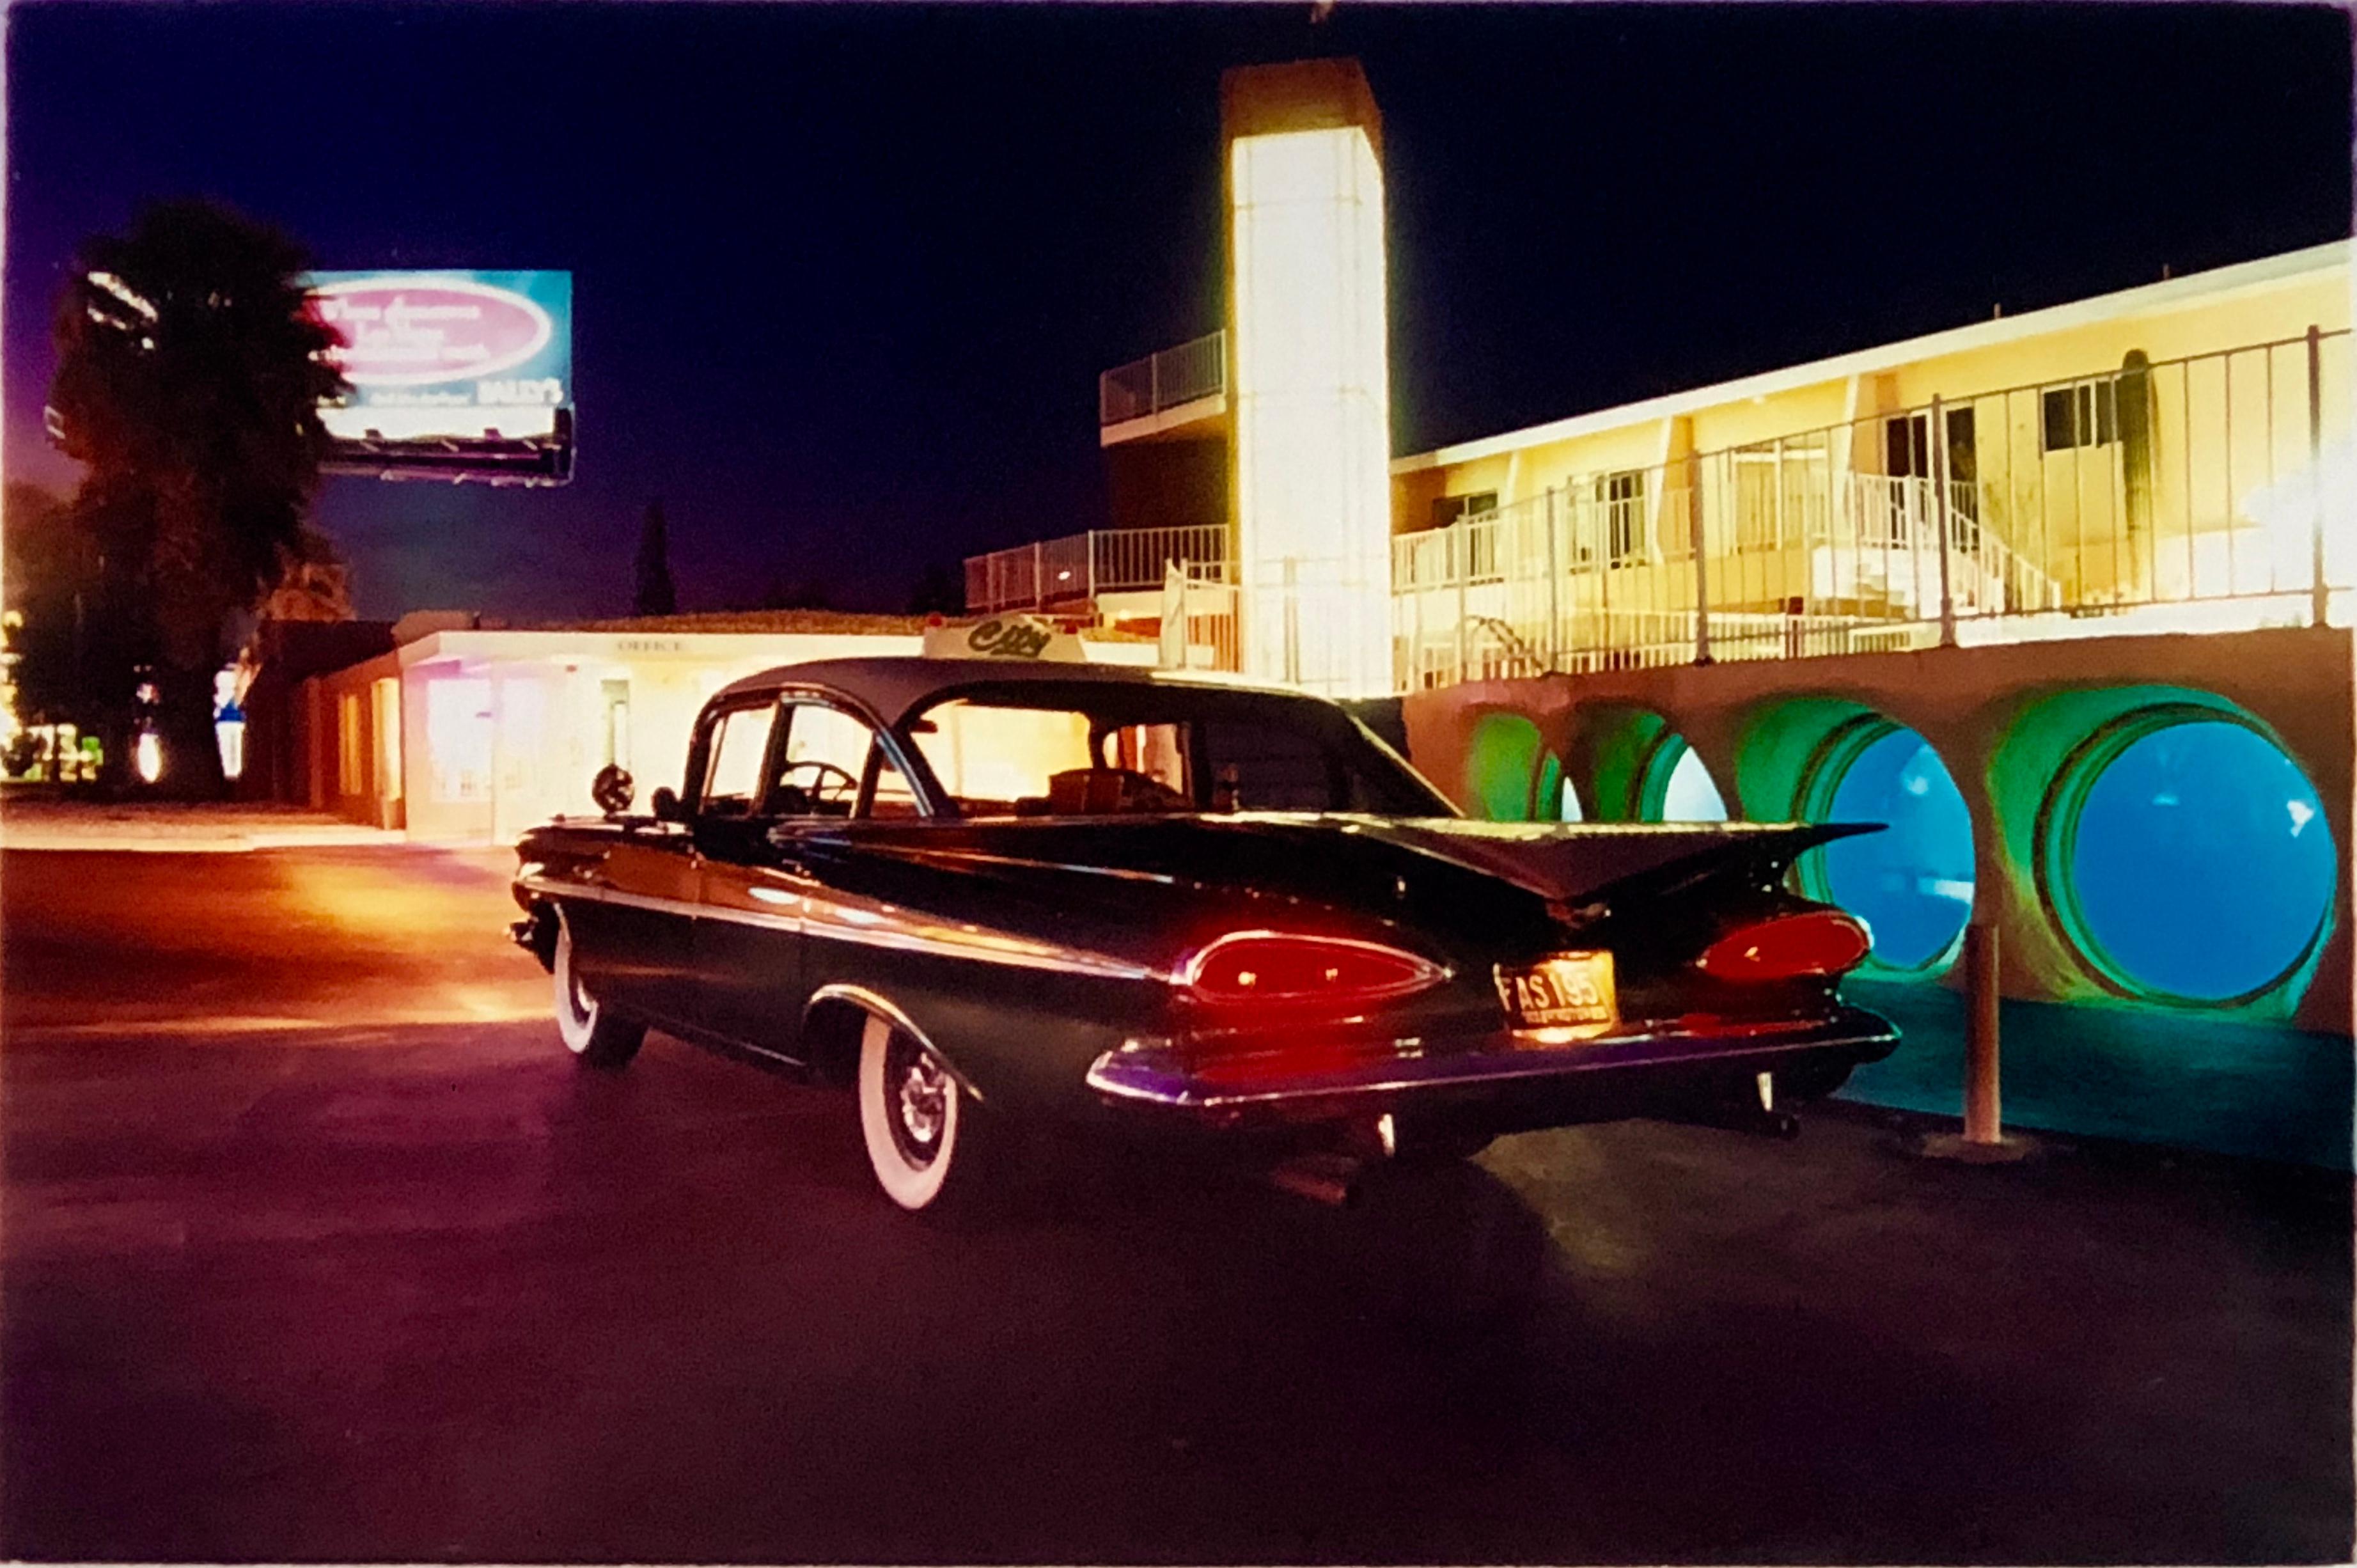 Patrick's Bel Air, Las Vegas, Nevada - American Vintage Las Vegas Photography